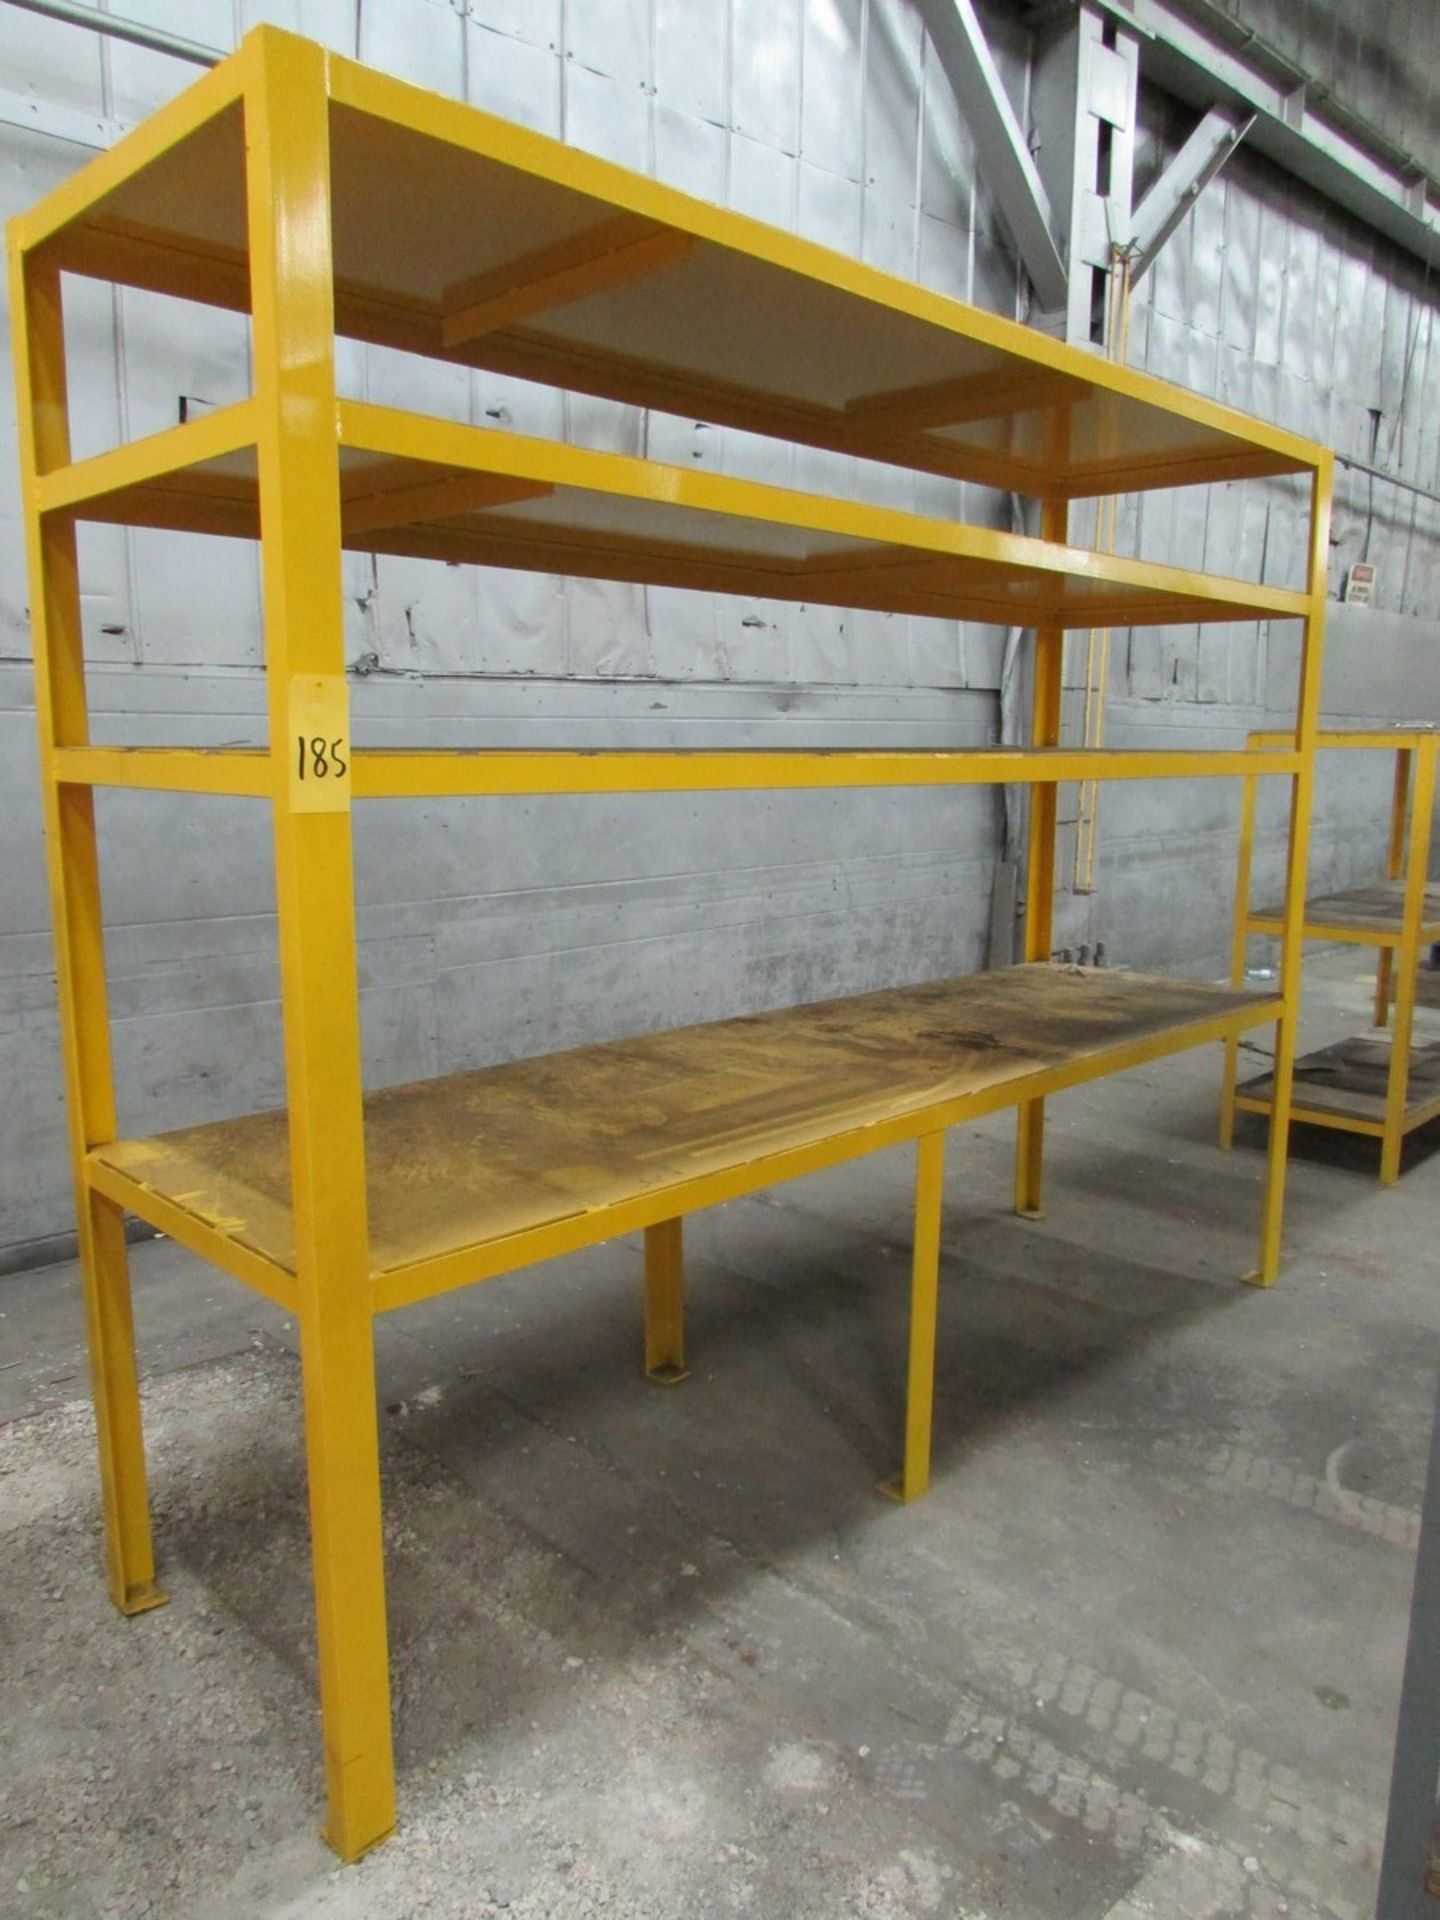 Large shelving unit; 31'' x 115'' x 89''H - Image 2 of 2